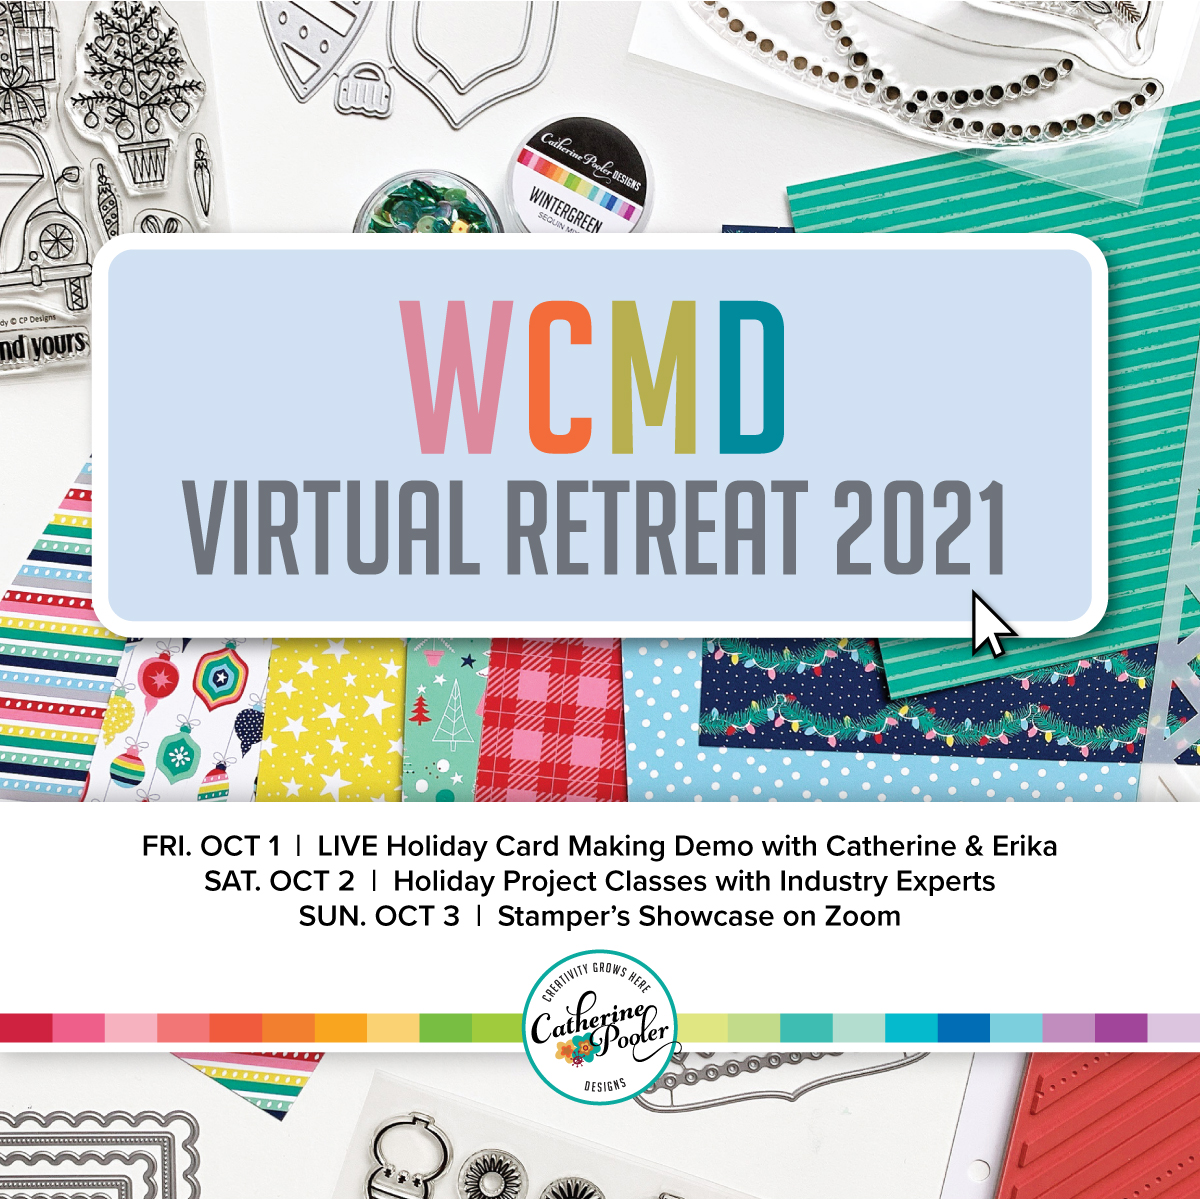 Catherine Pooler | WCMD Virtual Retreat 2021